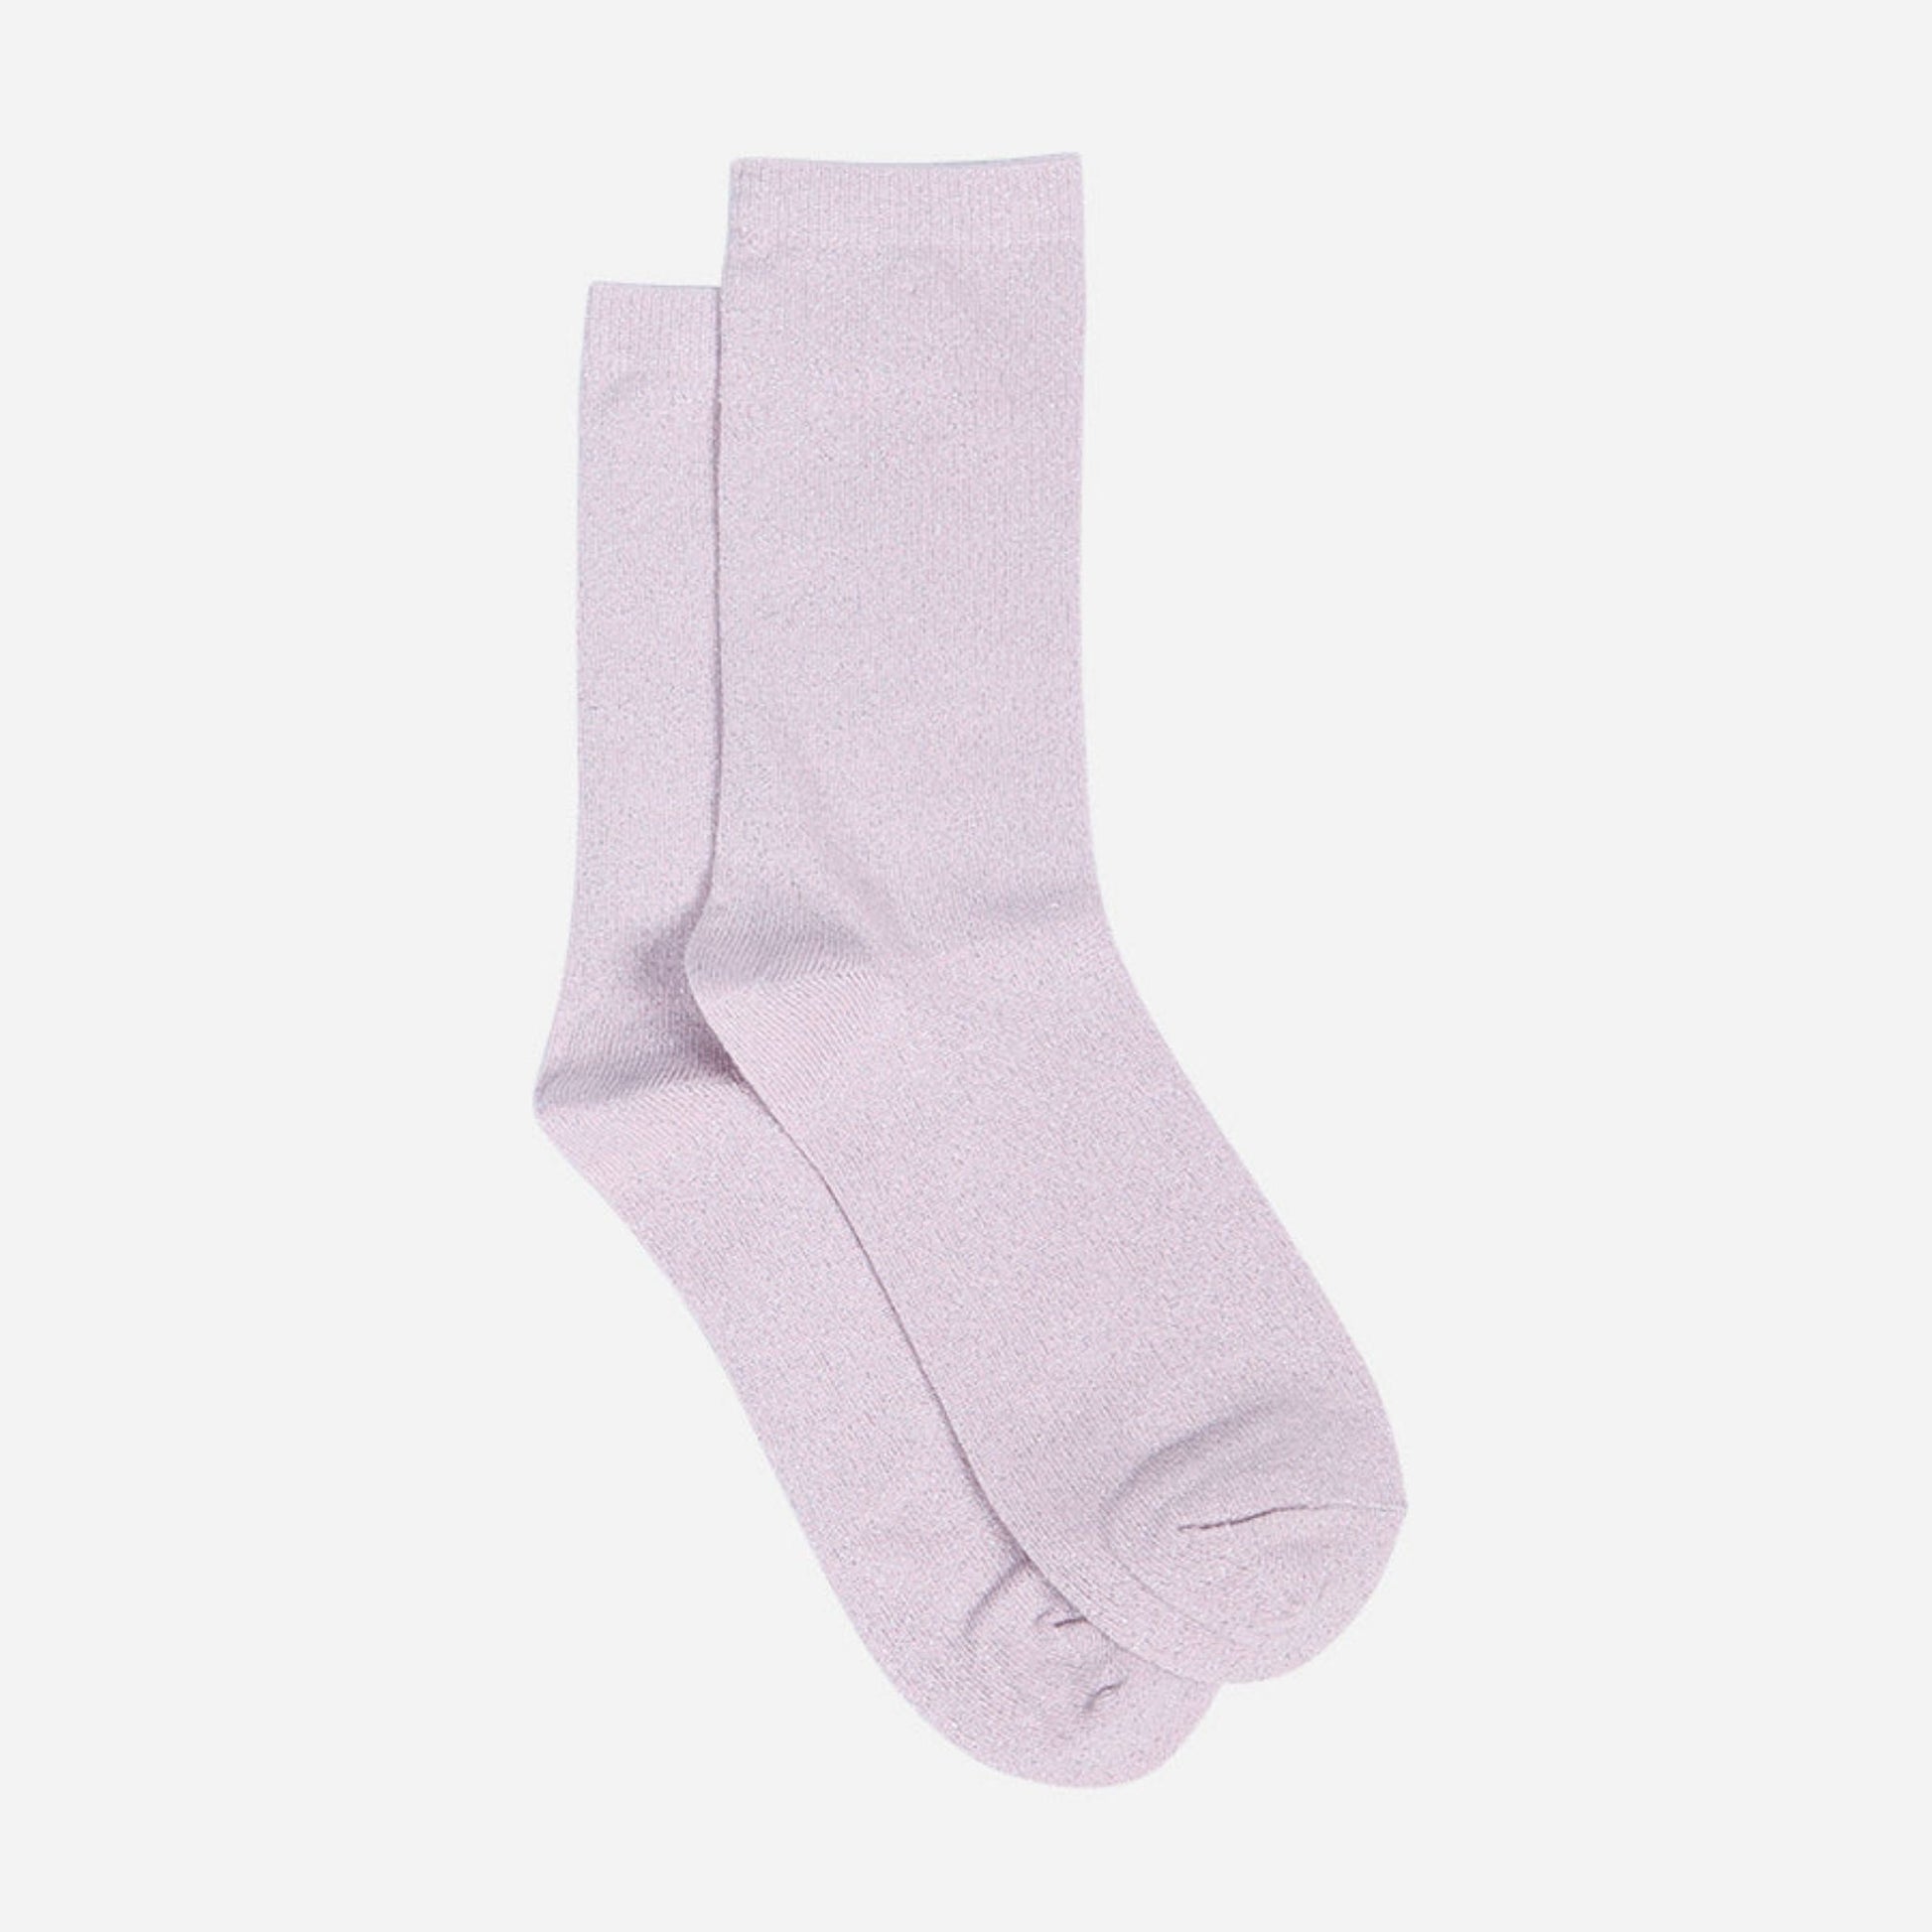 pink sparkly socks